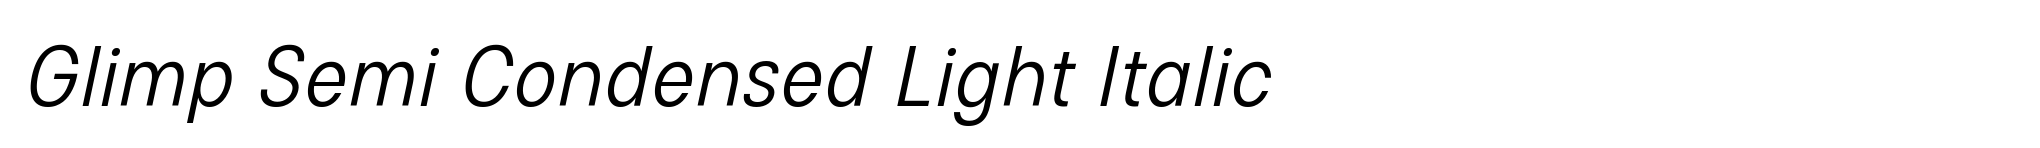 Glimp Semi Condensed Light Italic image